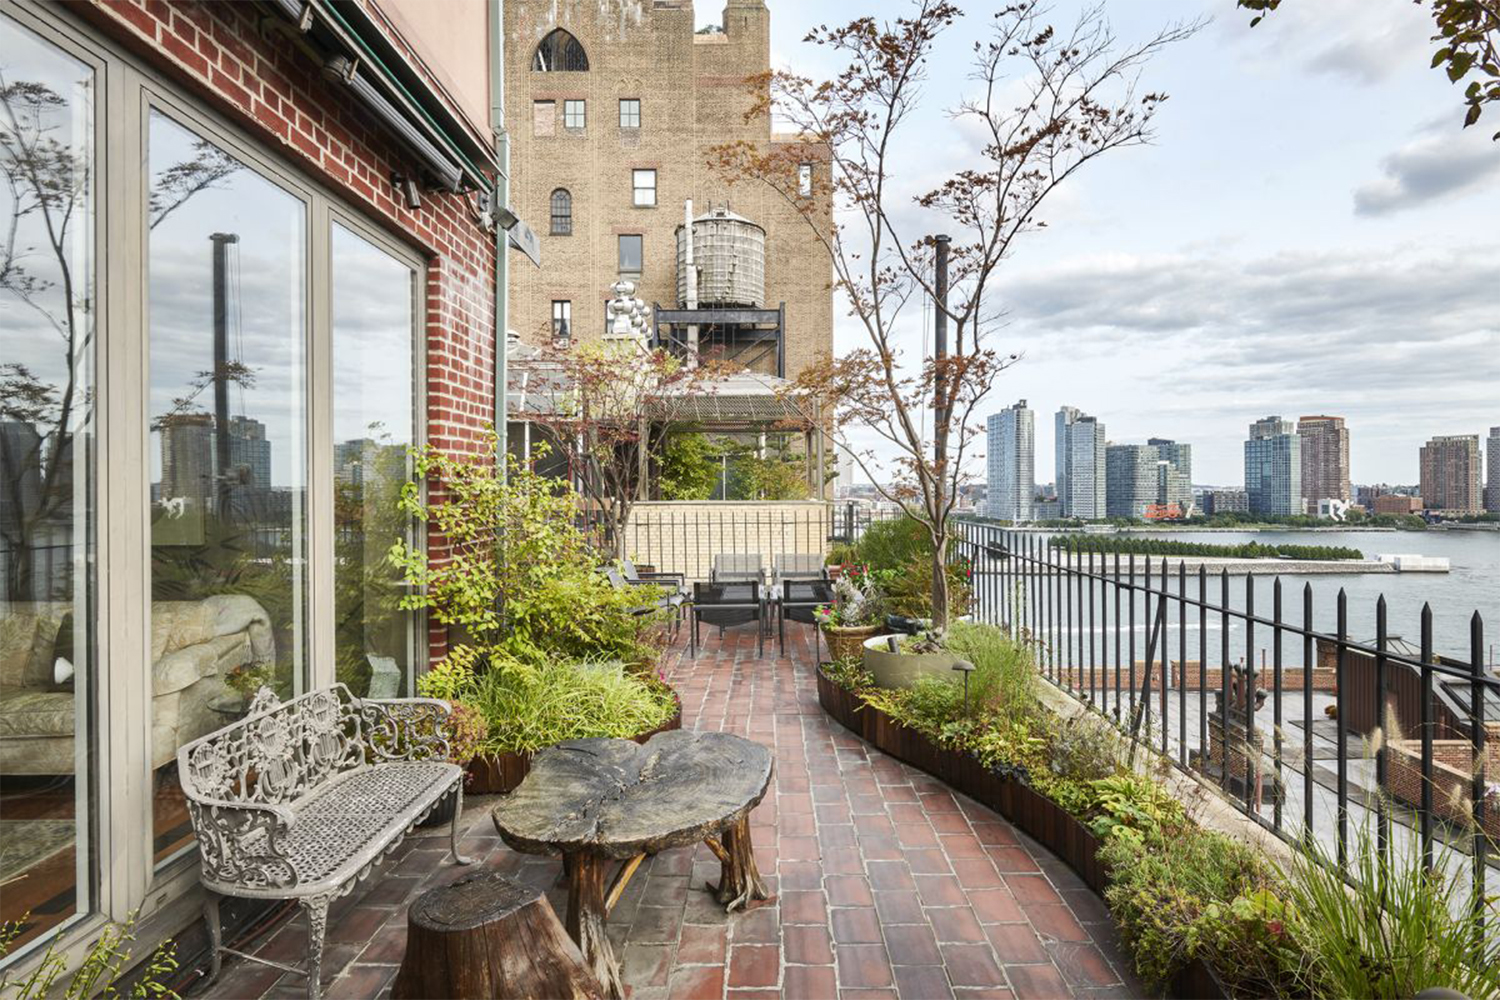 The terrace of John Lennon's "Lost Weekend" penthouse in NYC